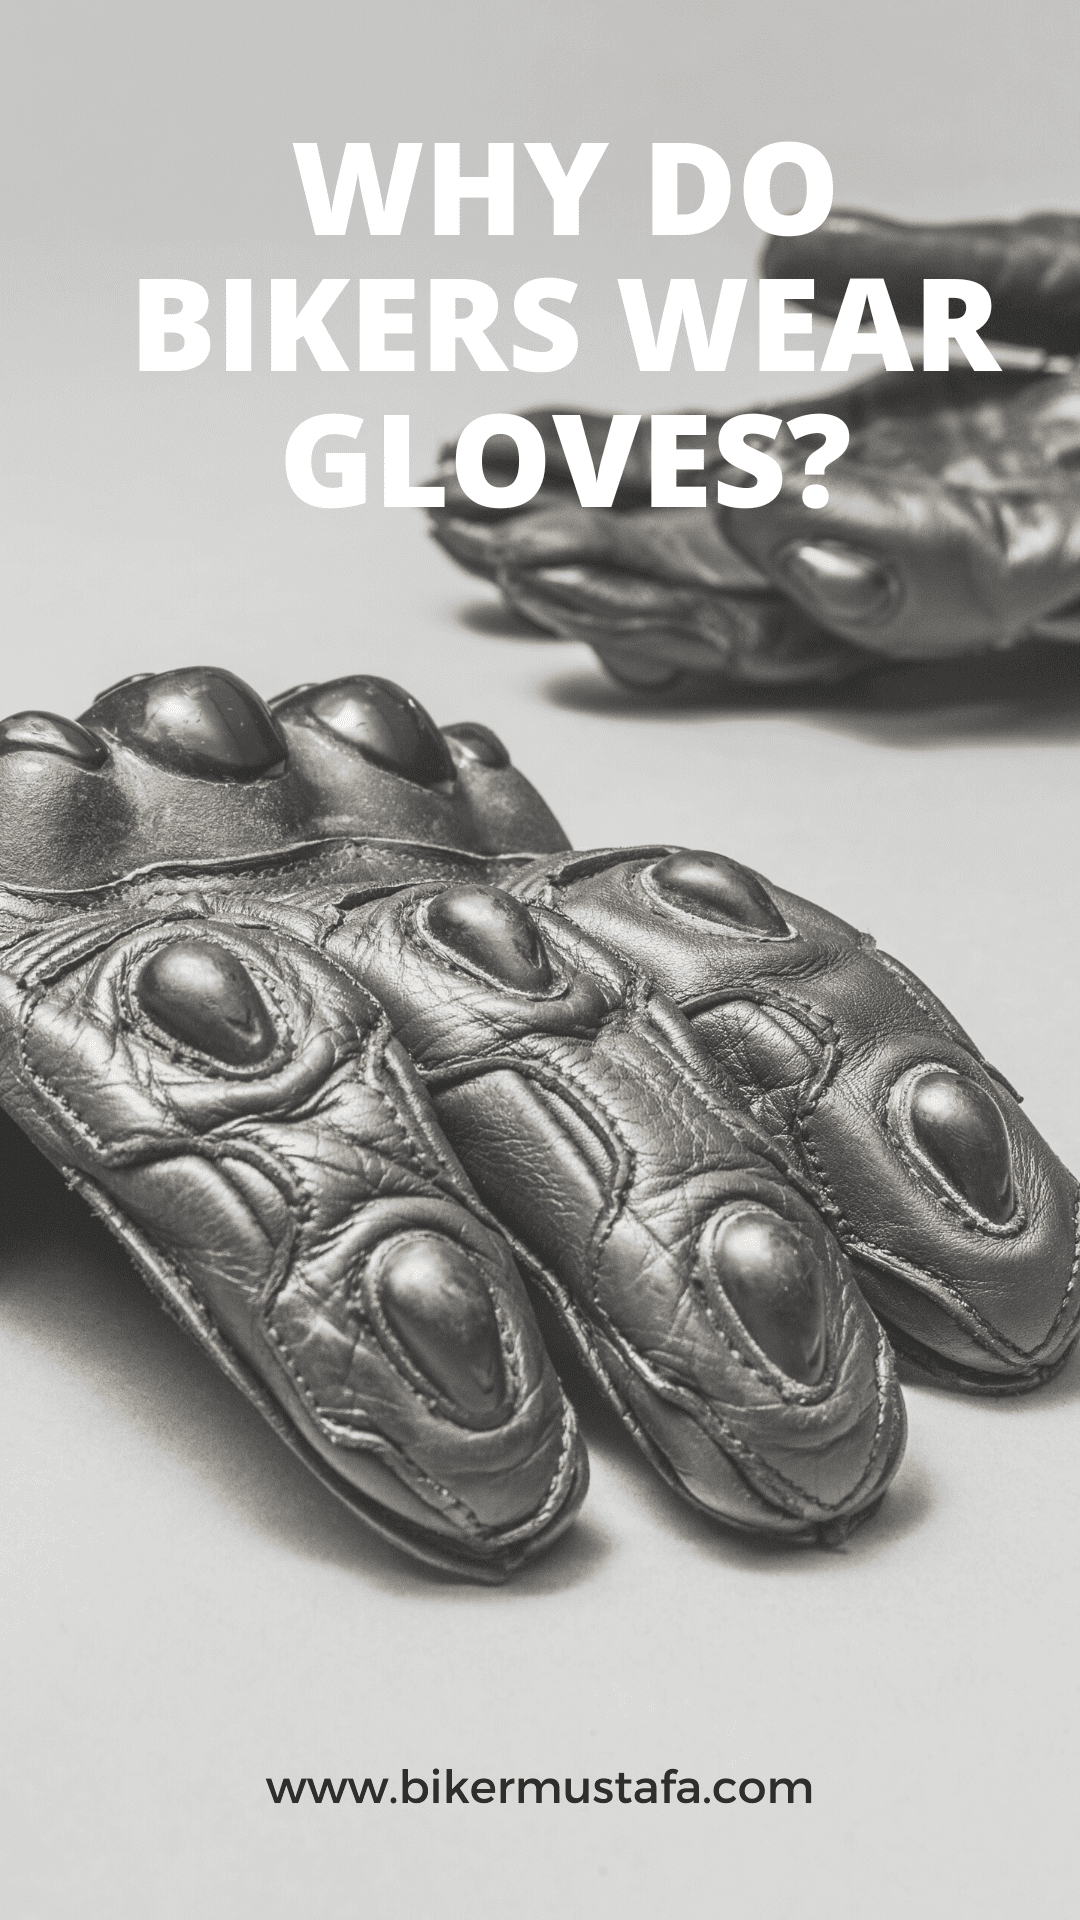 Why Do Bikers Wear Gloves?